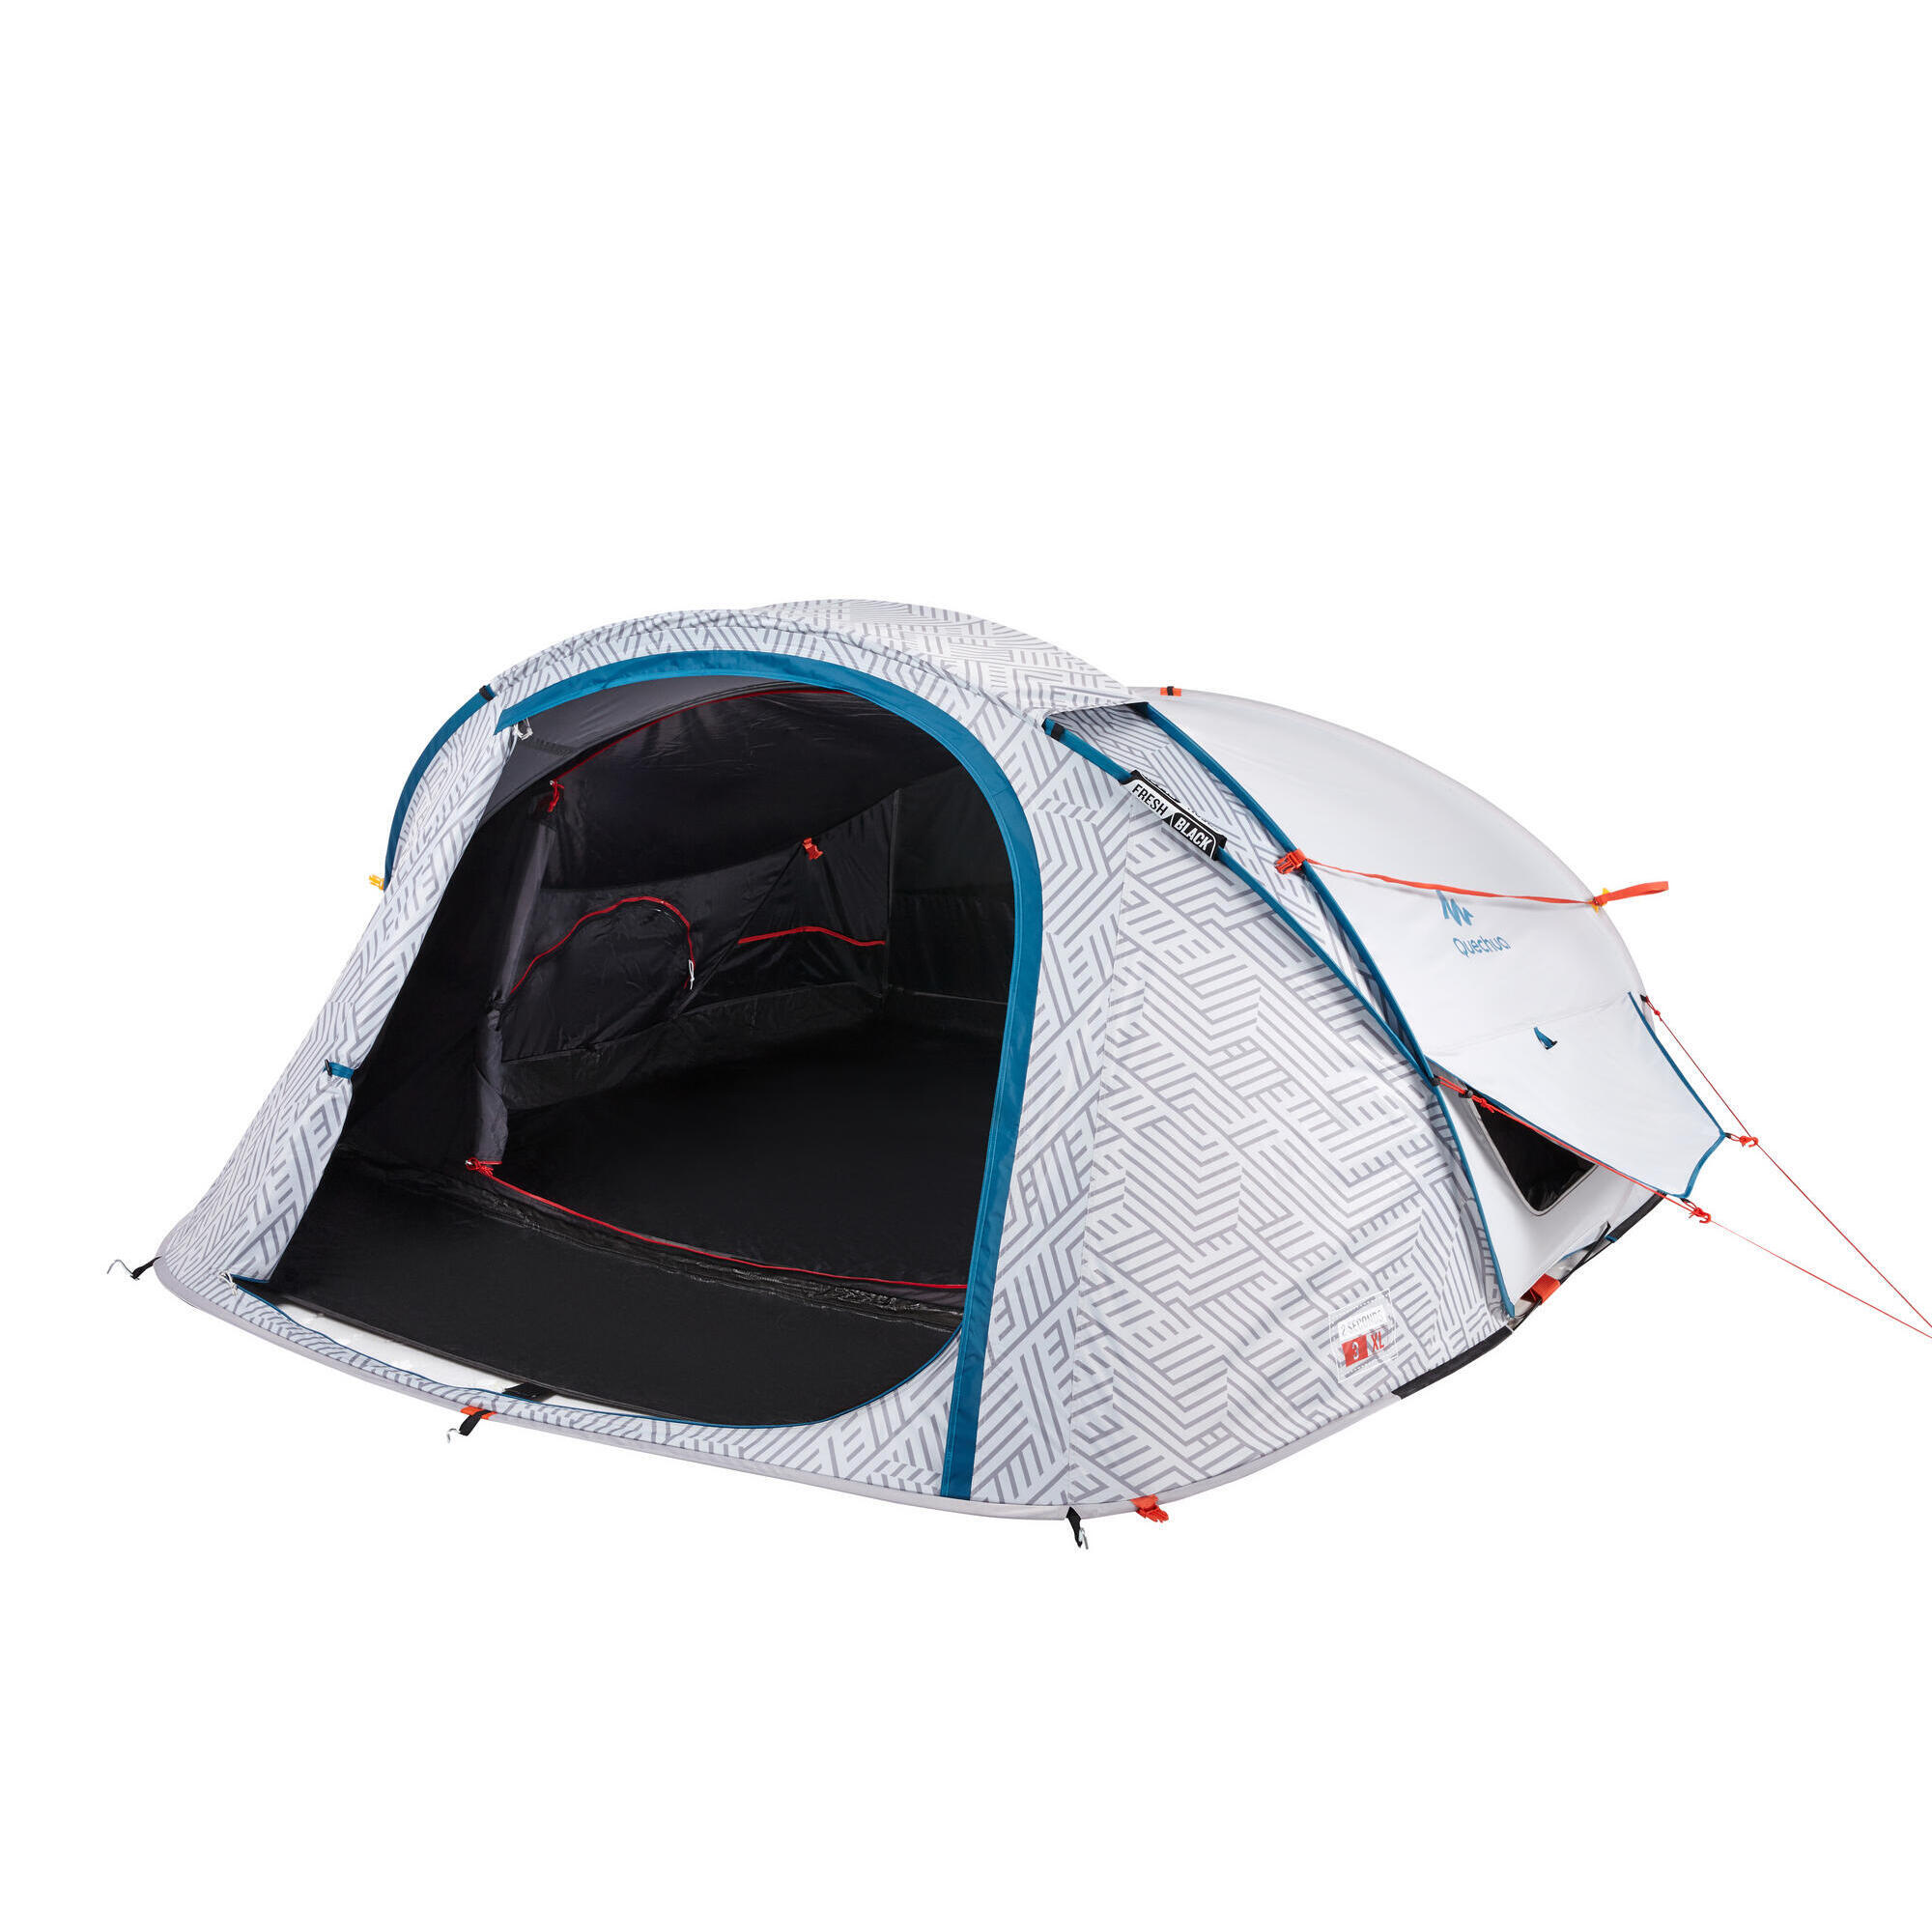 best bike camping tent